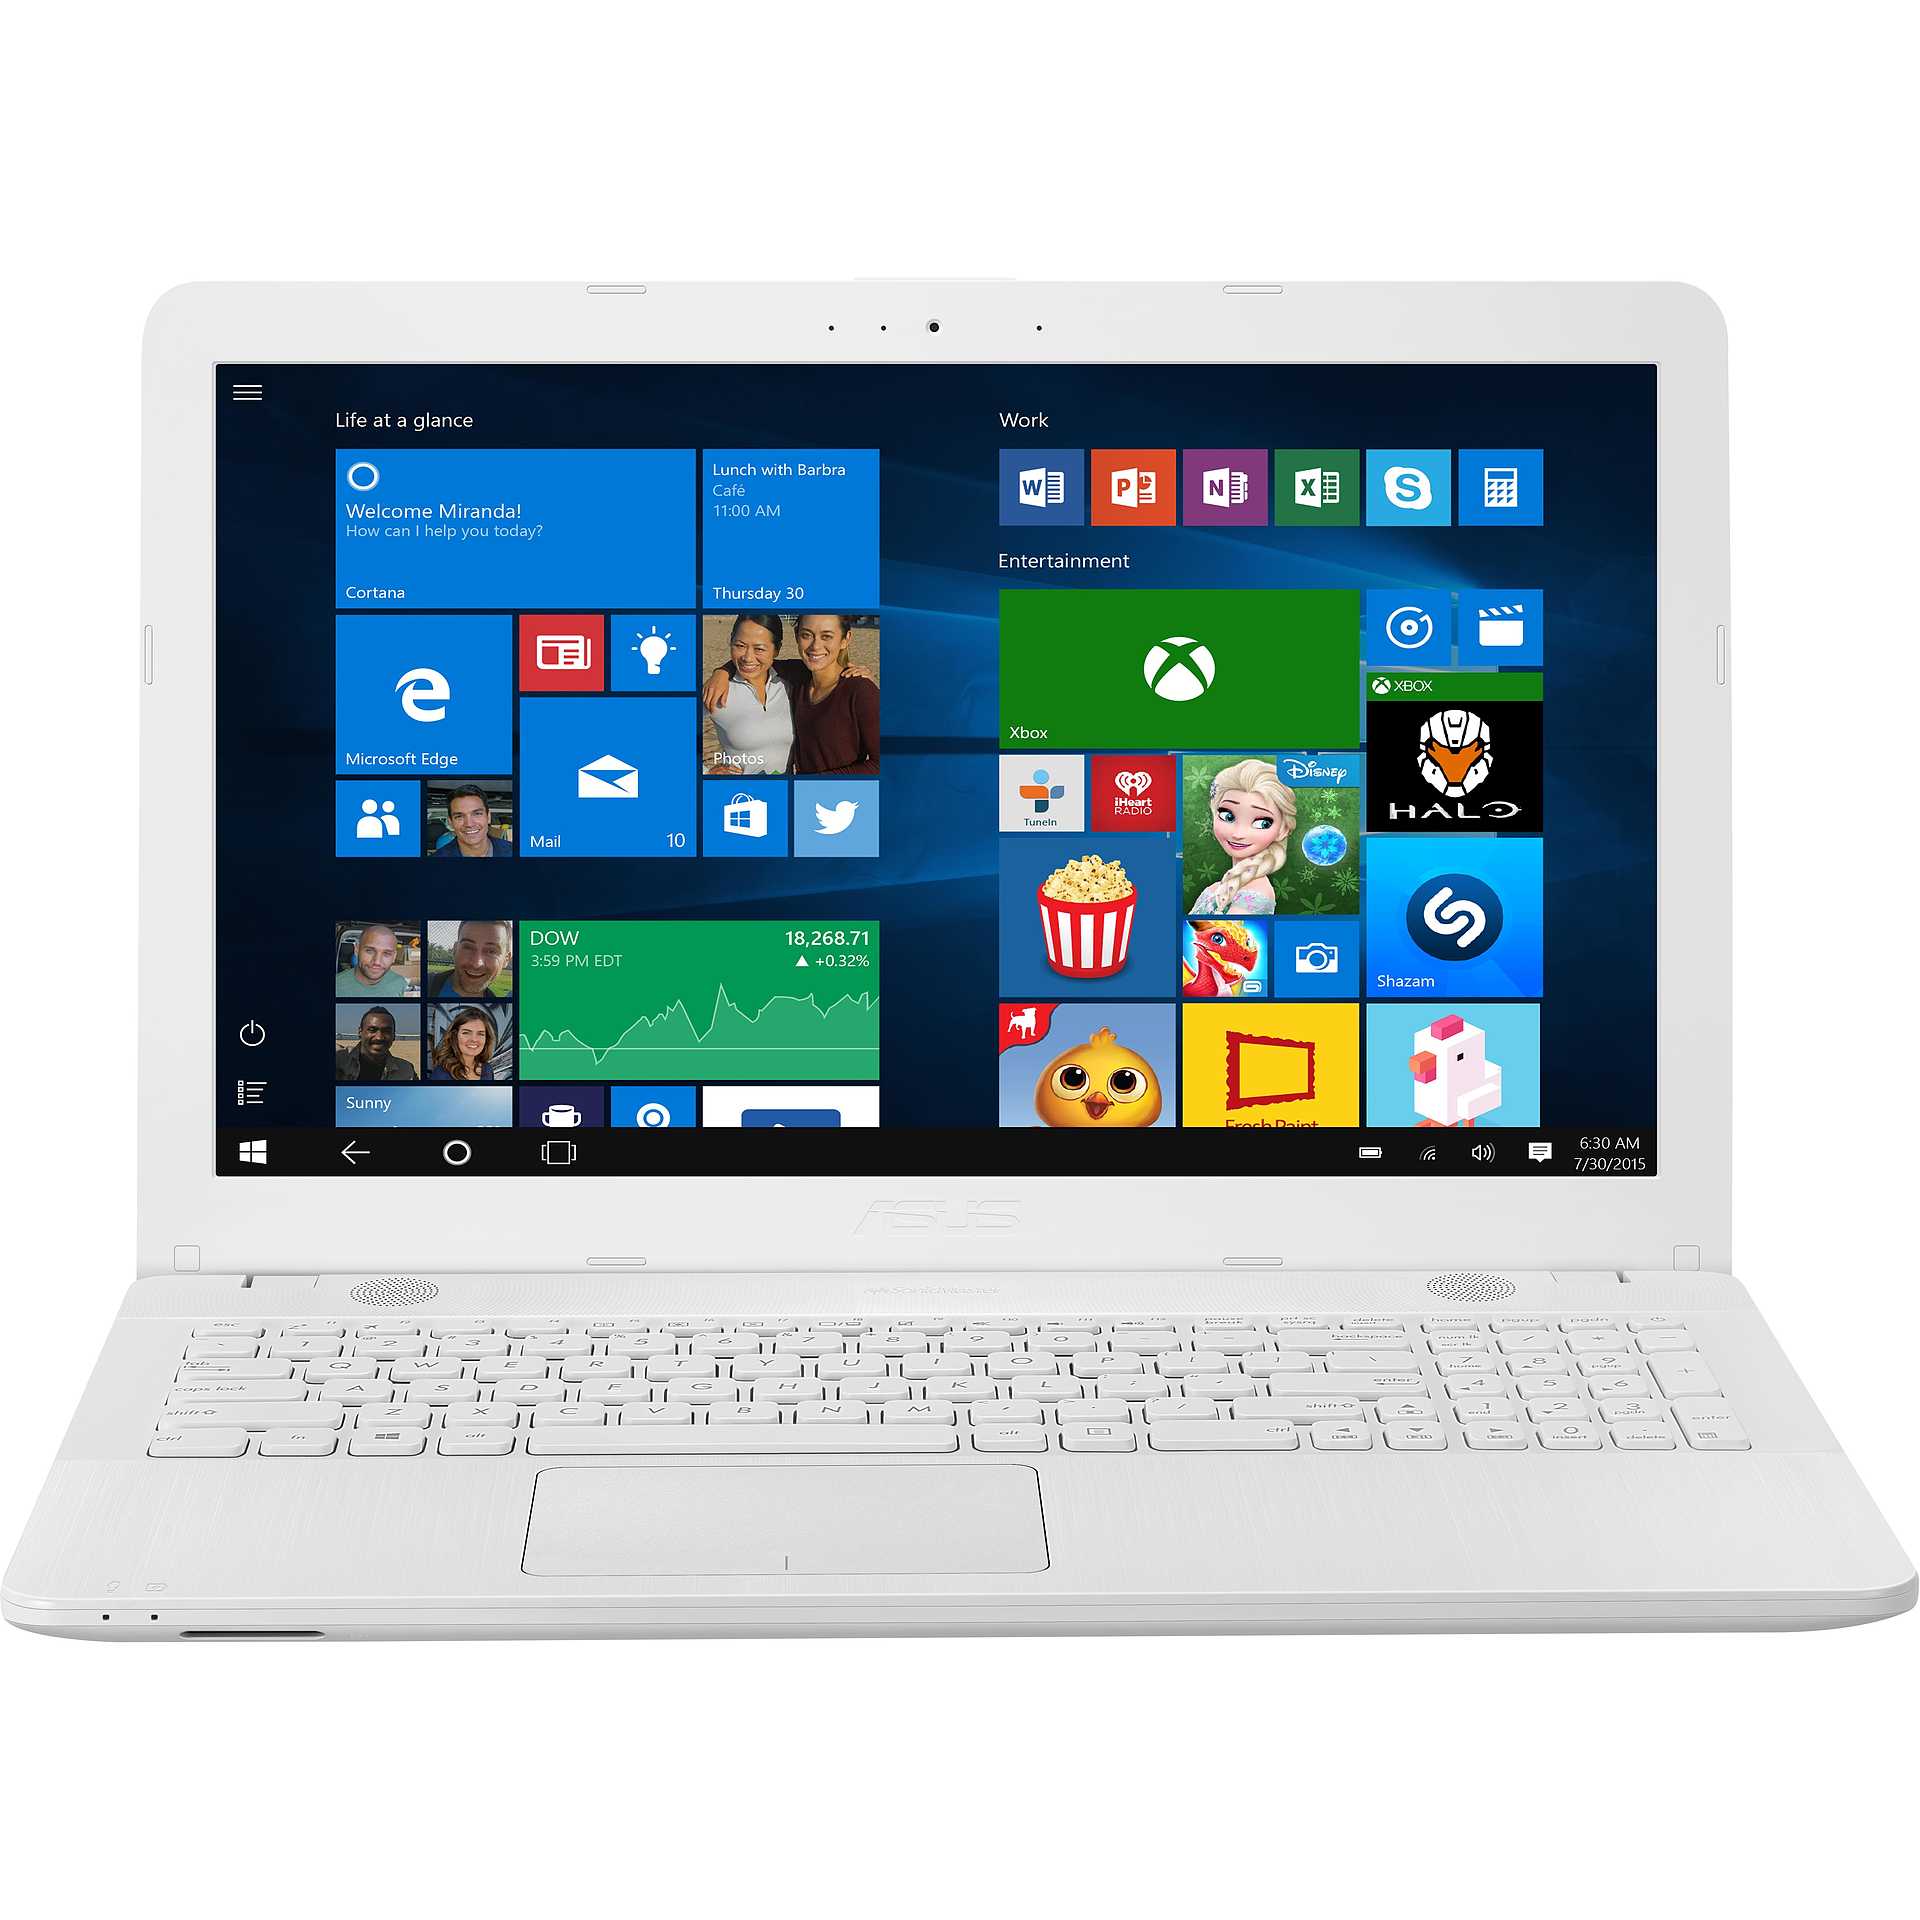 Asus VivoBook Max colore Bianco Notebook Windows 10 Home